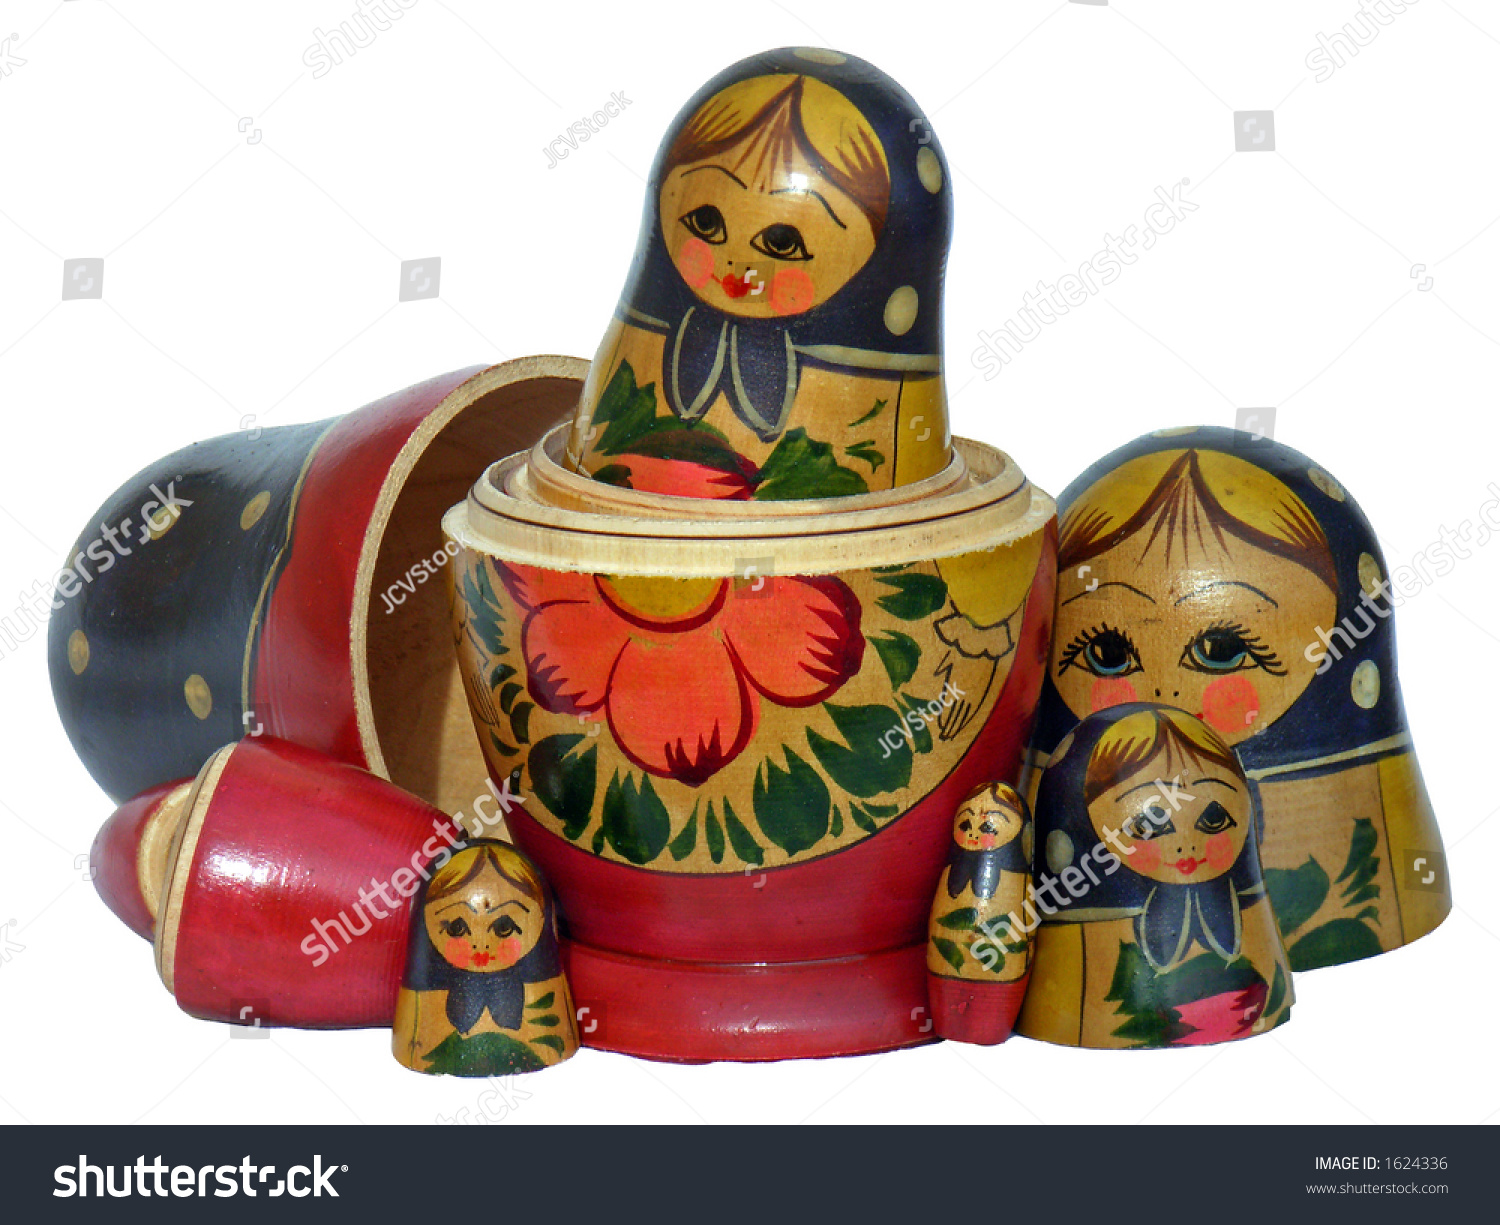 stock-photo-wooden-russian-dolls-1624336.jpg